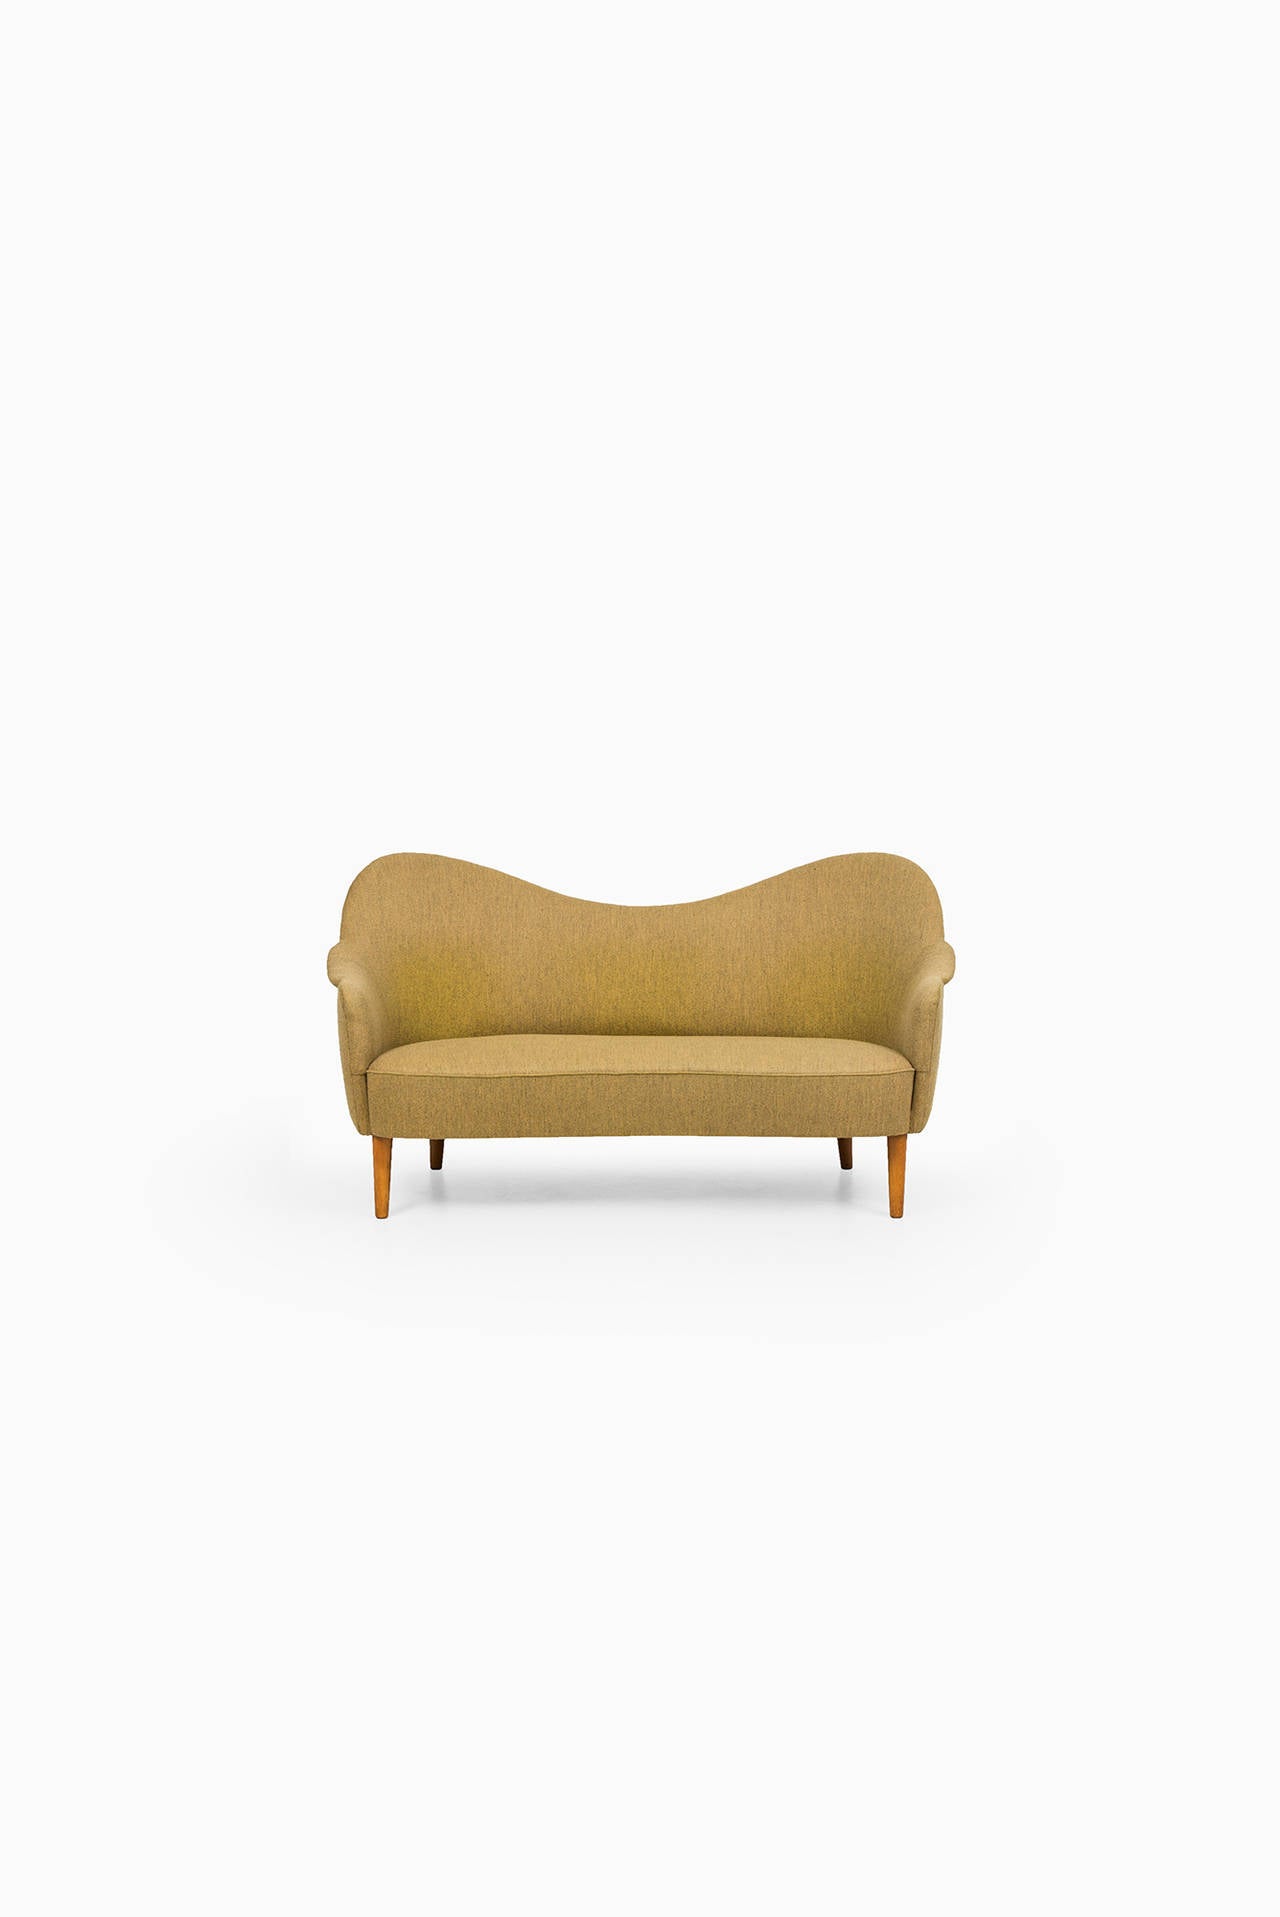 Mid-Century Modern Carl Malmsten Samspel Sofa by O.H SjöGren in Sweden